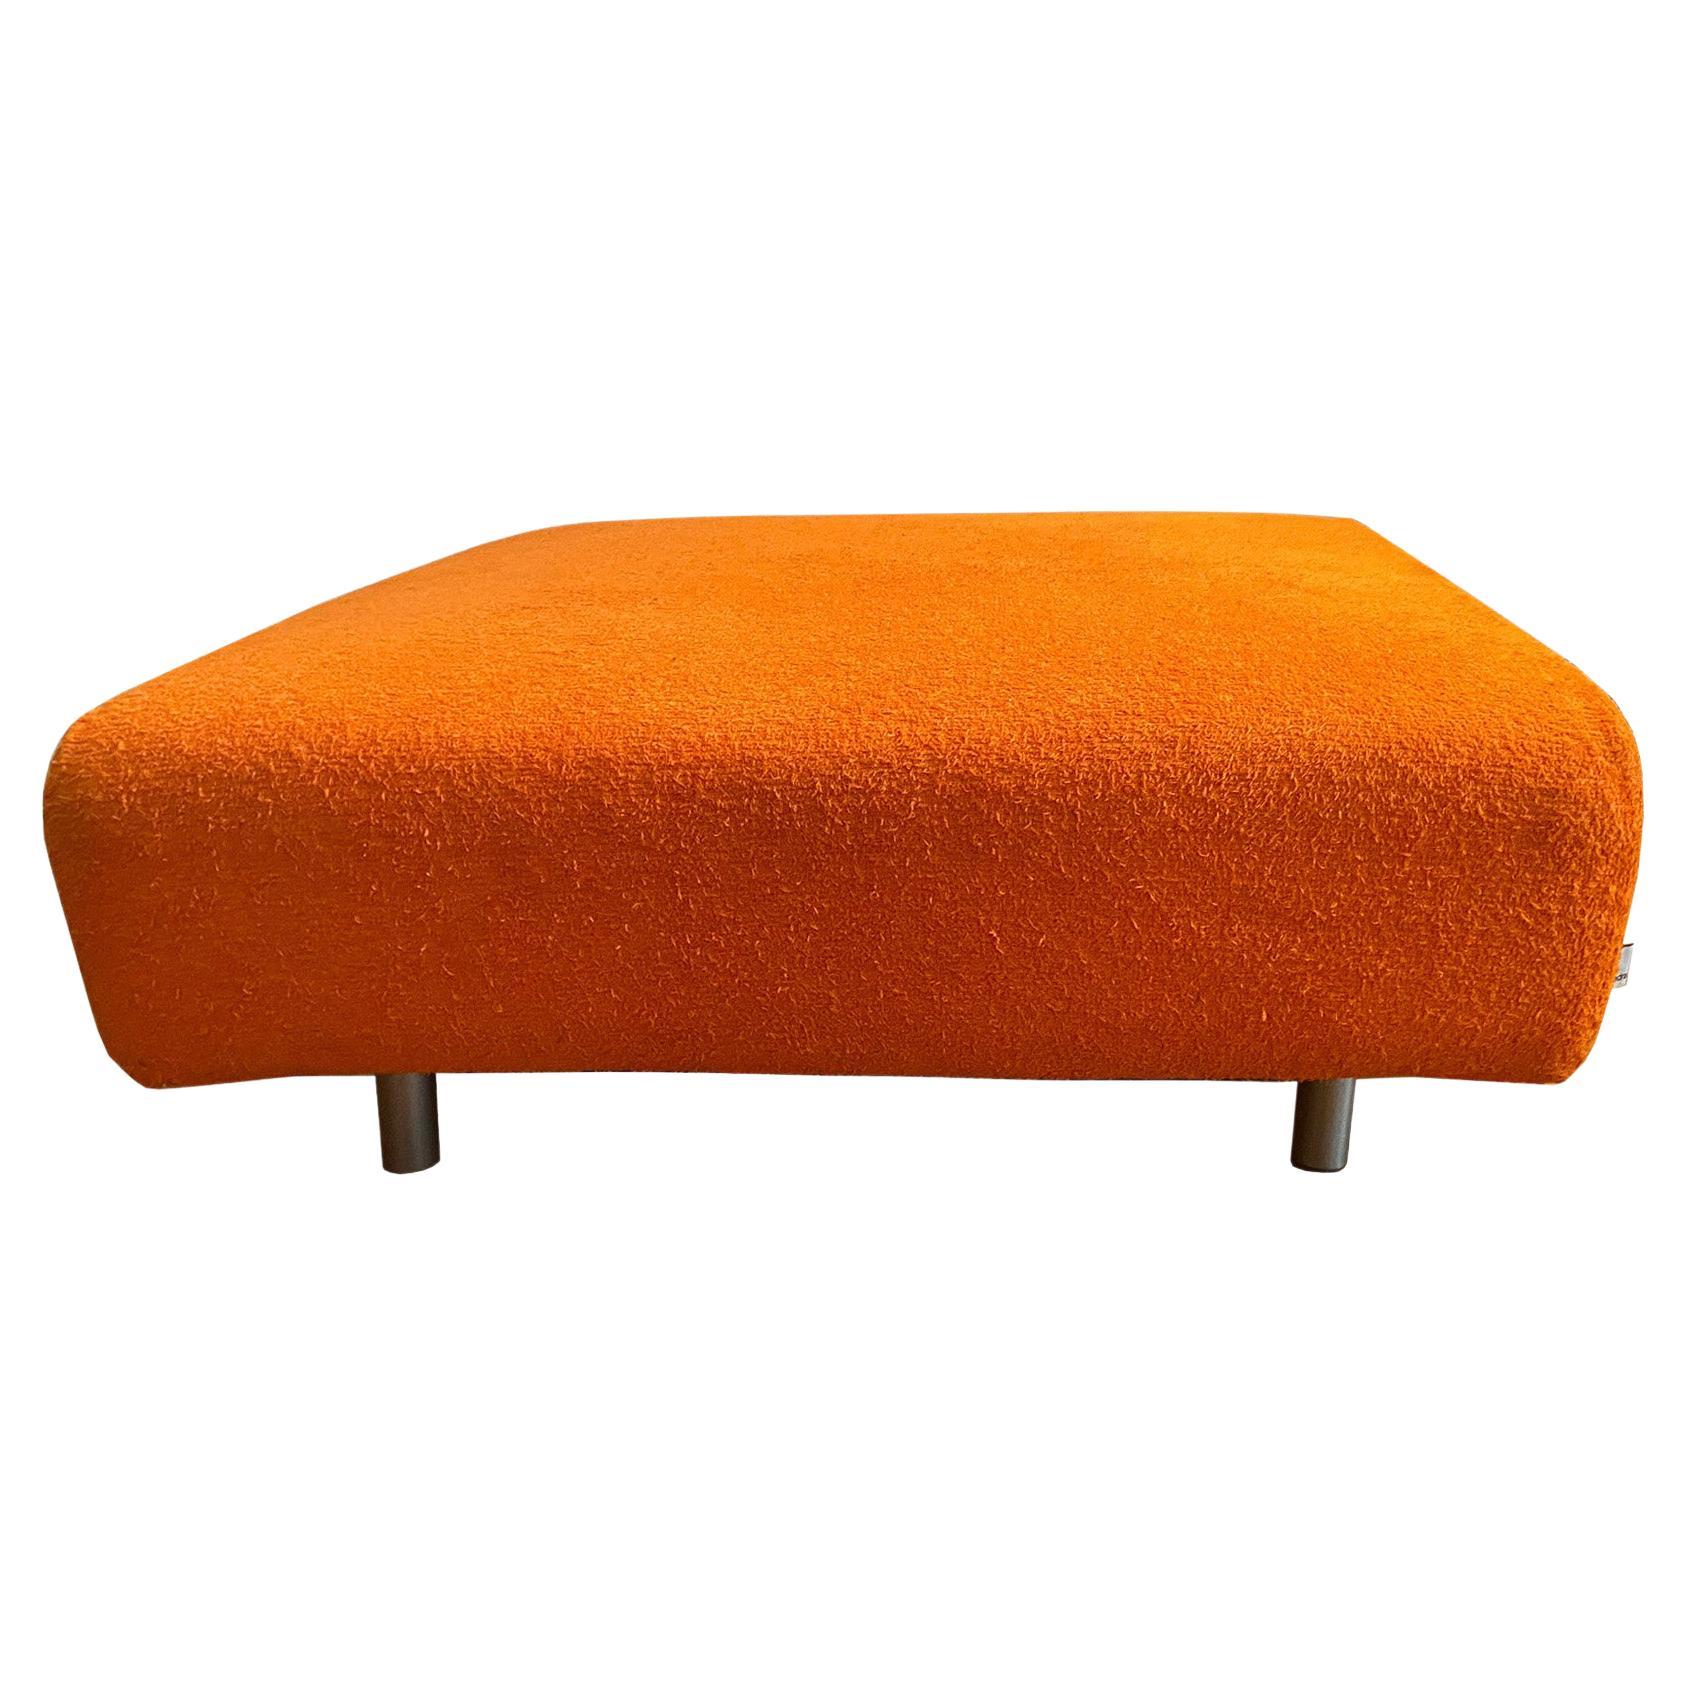 Edra Orange Fabric Pouf, Italy, 1970s For Sale